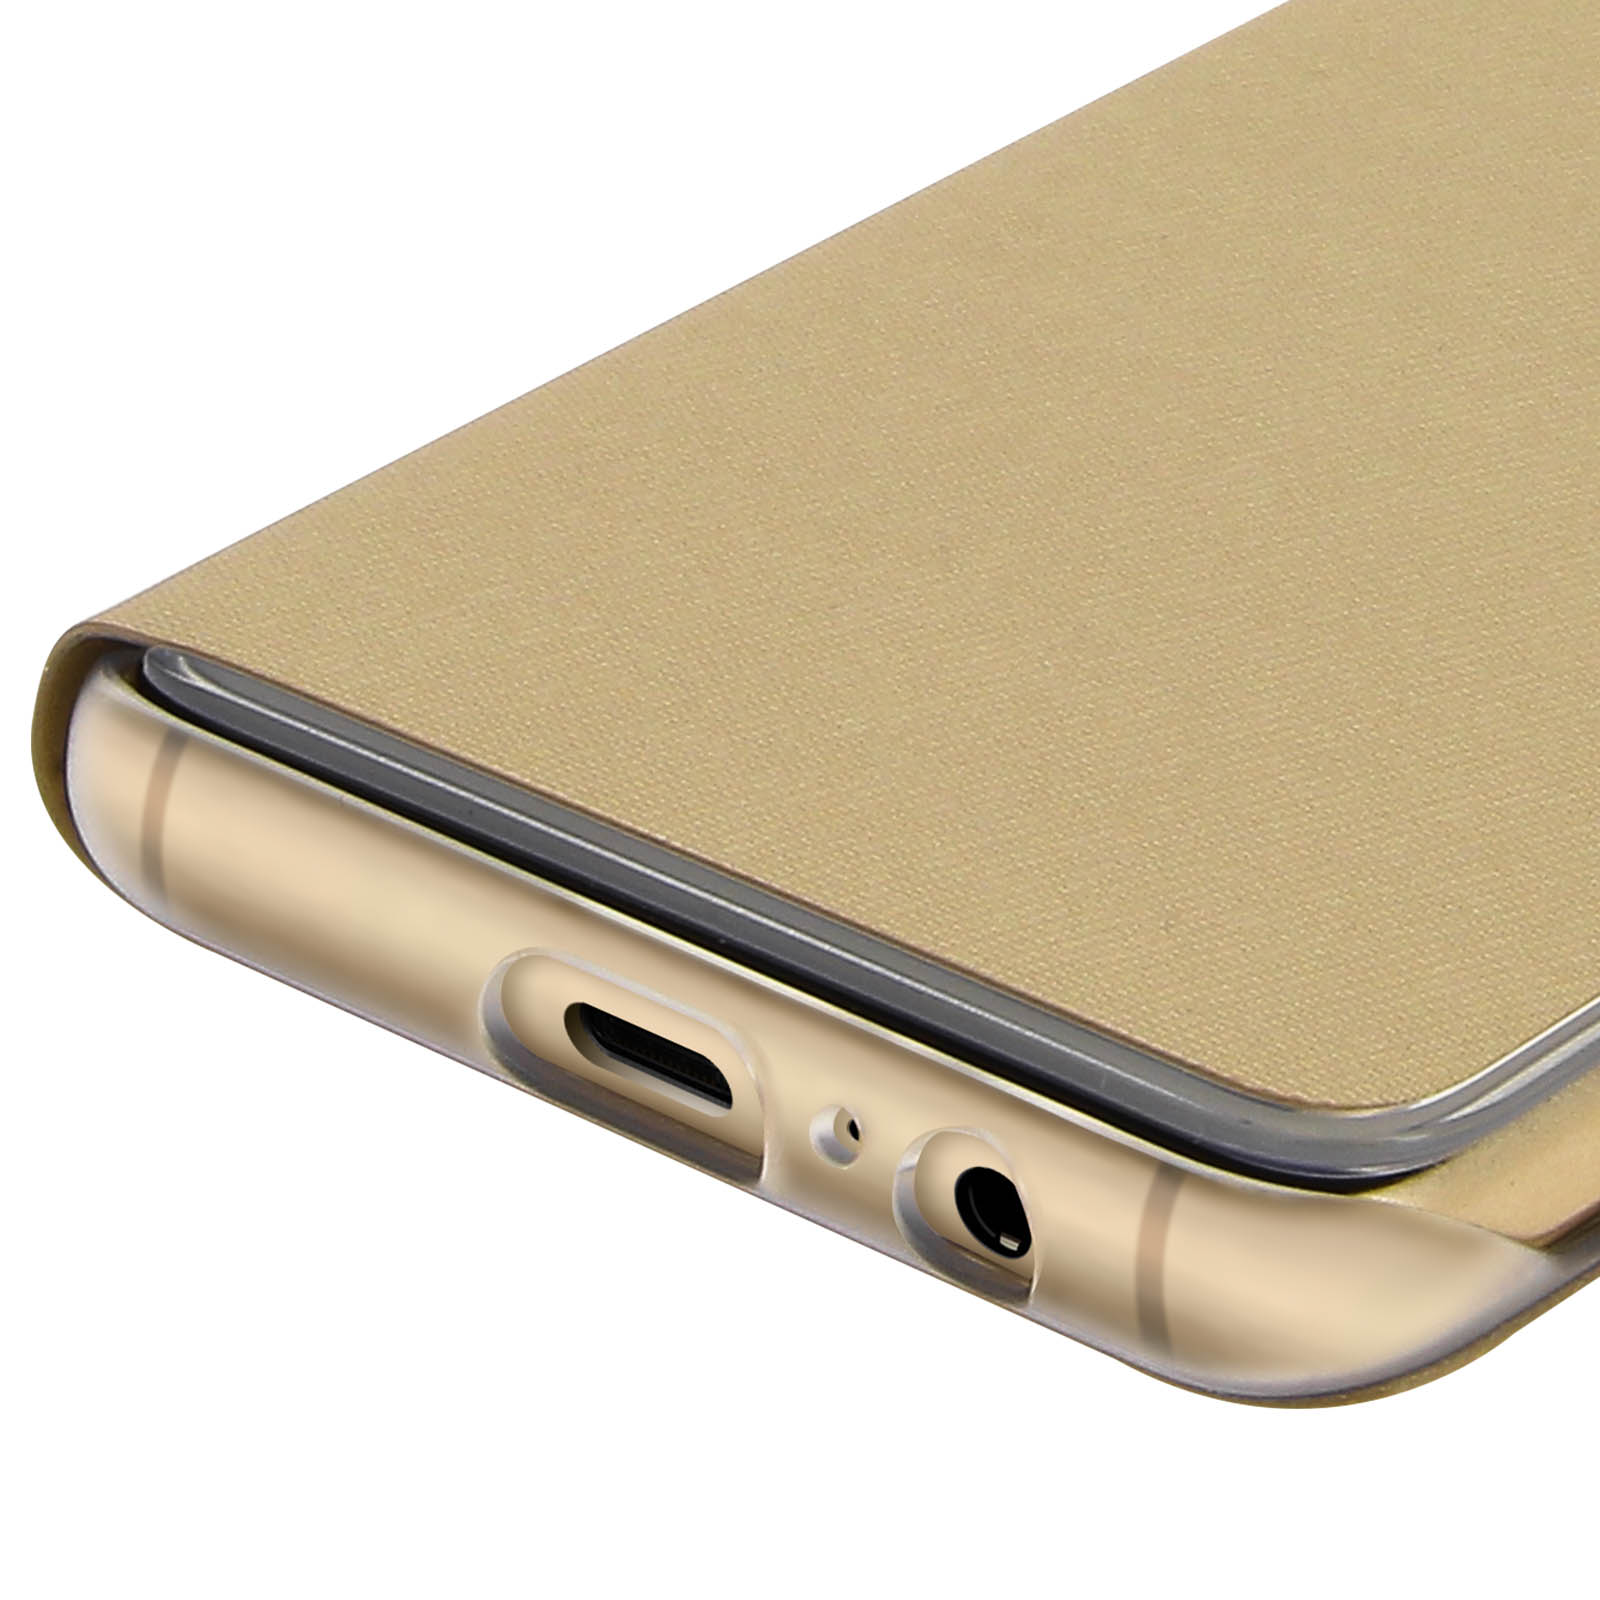 SAMSUNG EF-FA530 FLIP COVER A8 Gold Galaxy A8, NEON Samsung, Bookcover, GAL. GOLD